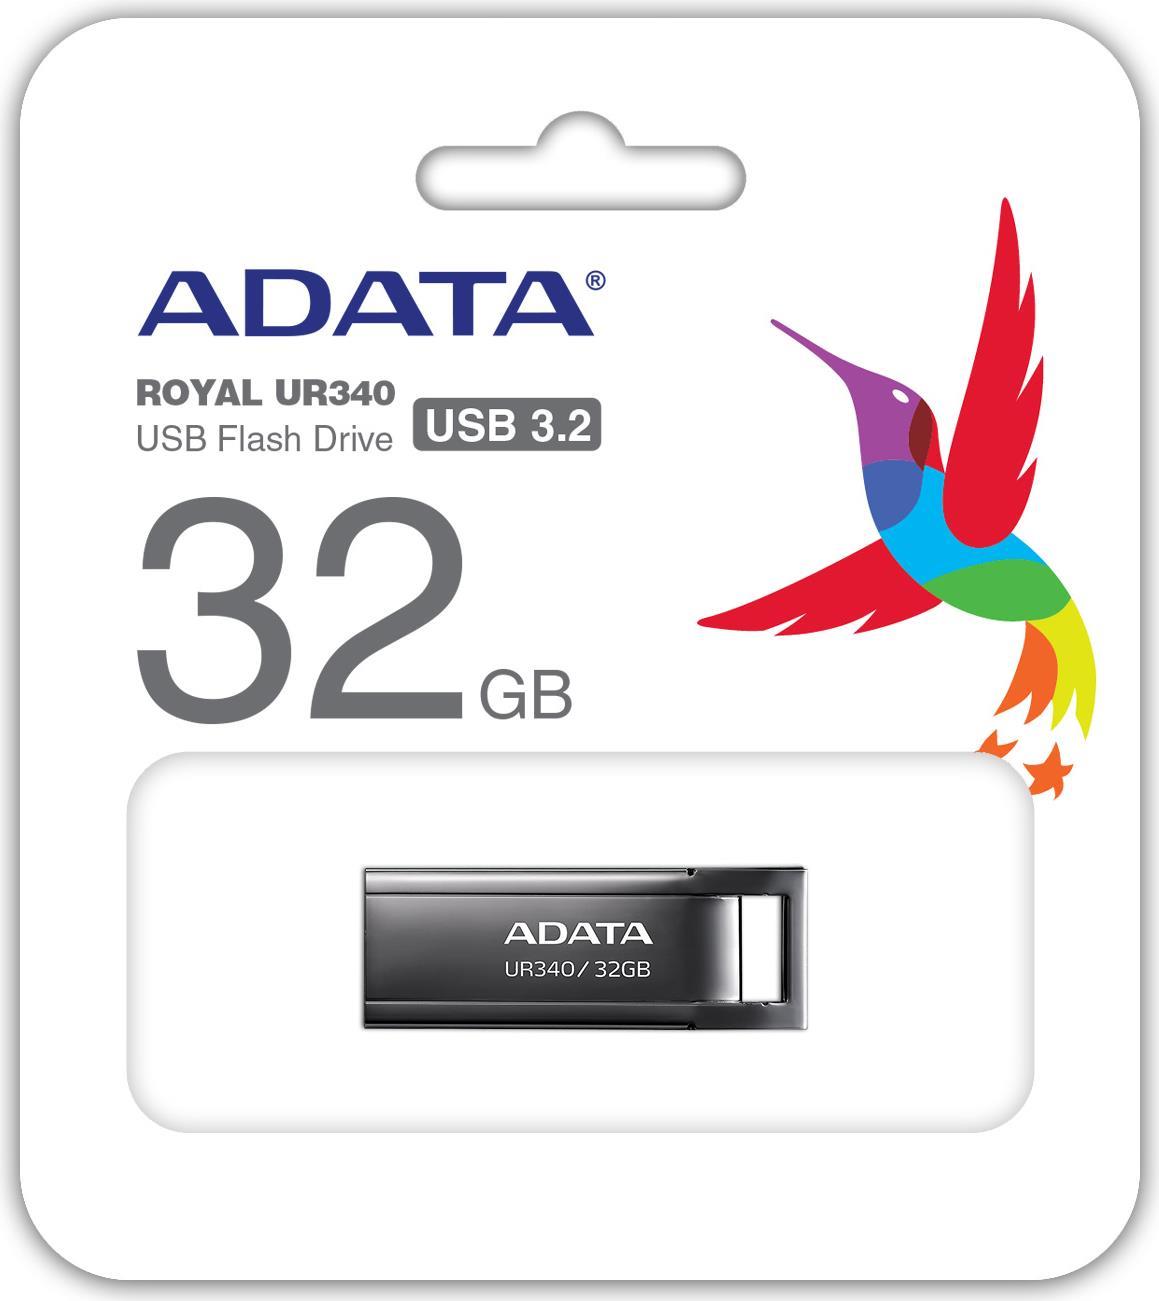 ADATA UR340 USB-Flash-Laufwerk (AROY-UR340-32GBK)